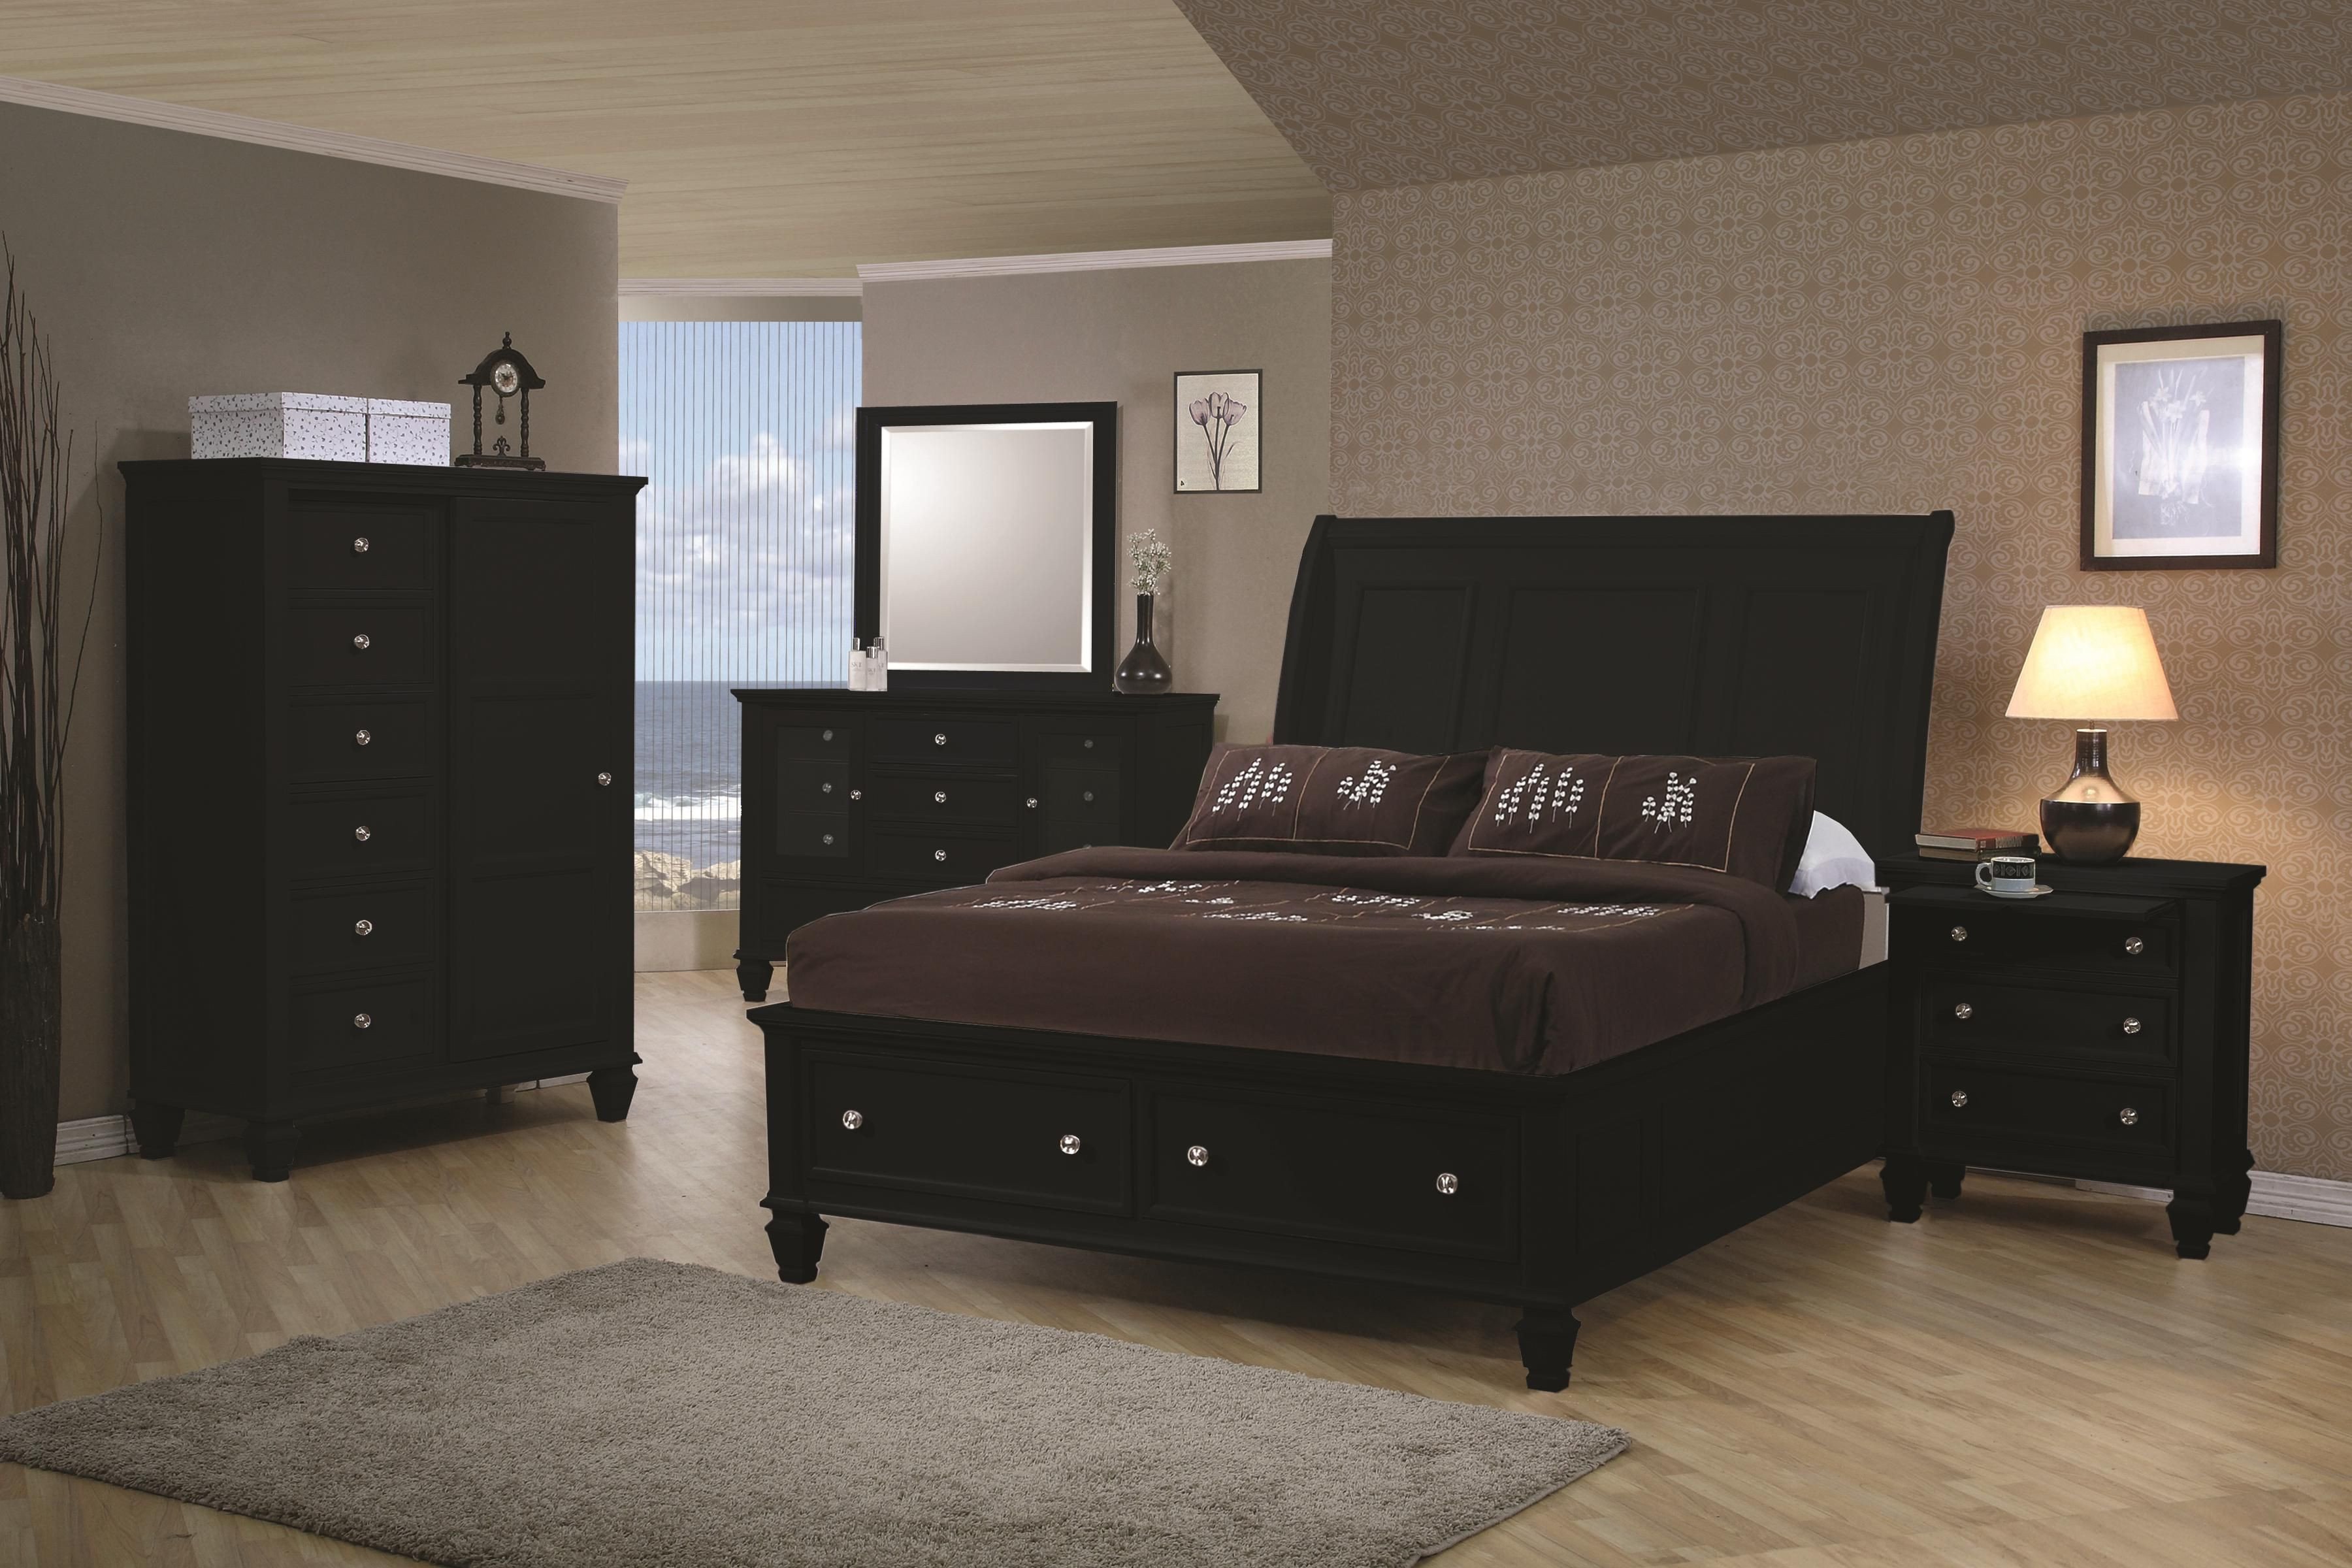 Black And Wood Bedroom Decor